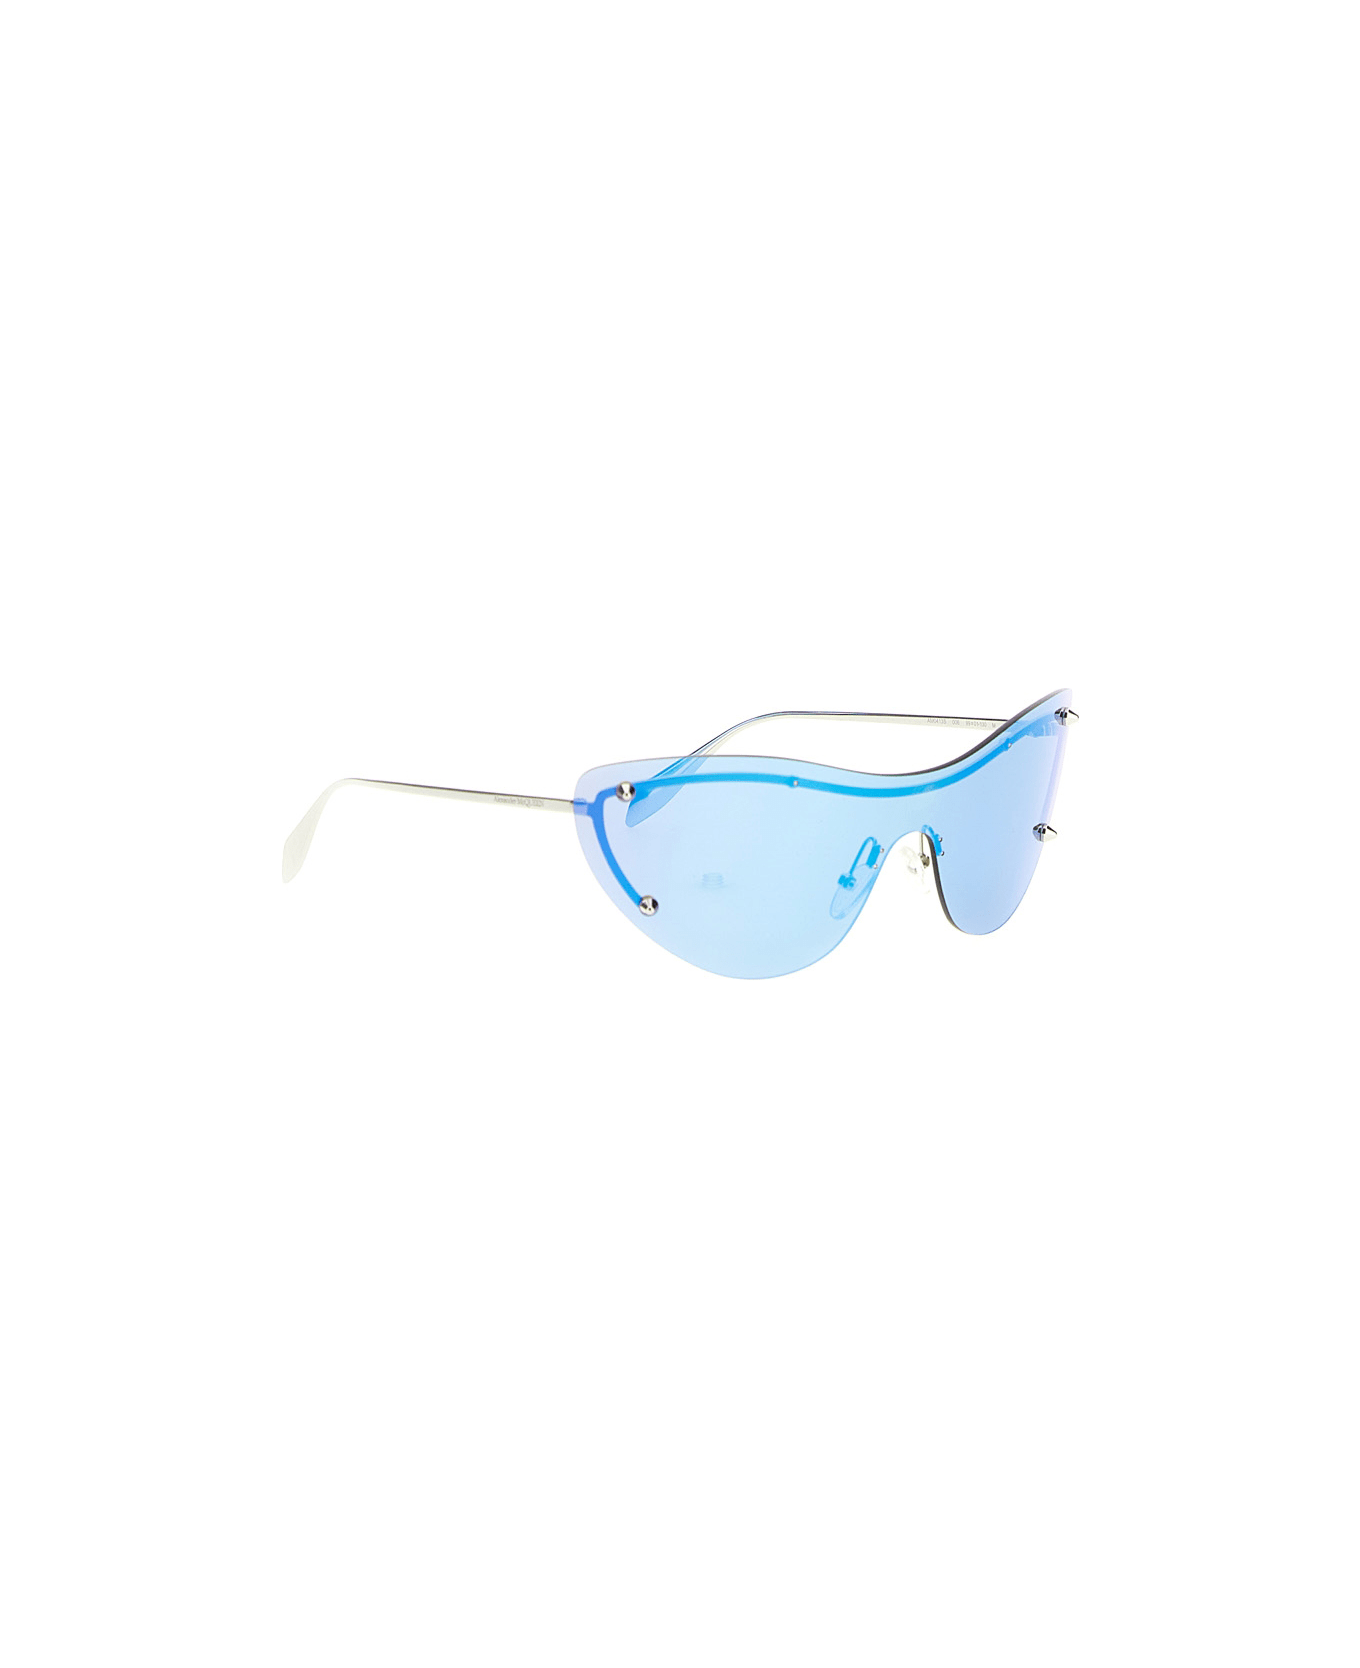 Alexander McQueen Eyewear Spike Studs Cat-eye Mask Sunglasses - Blu